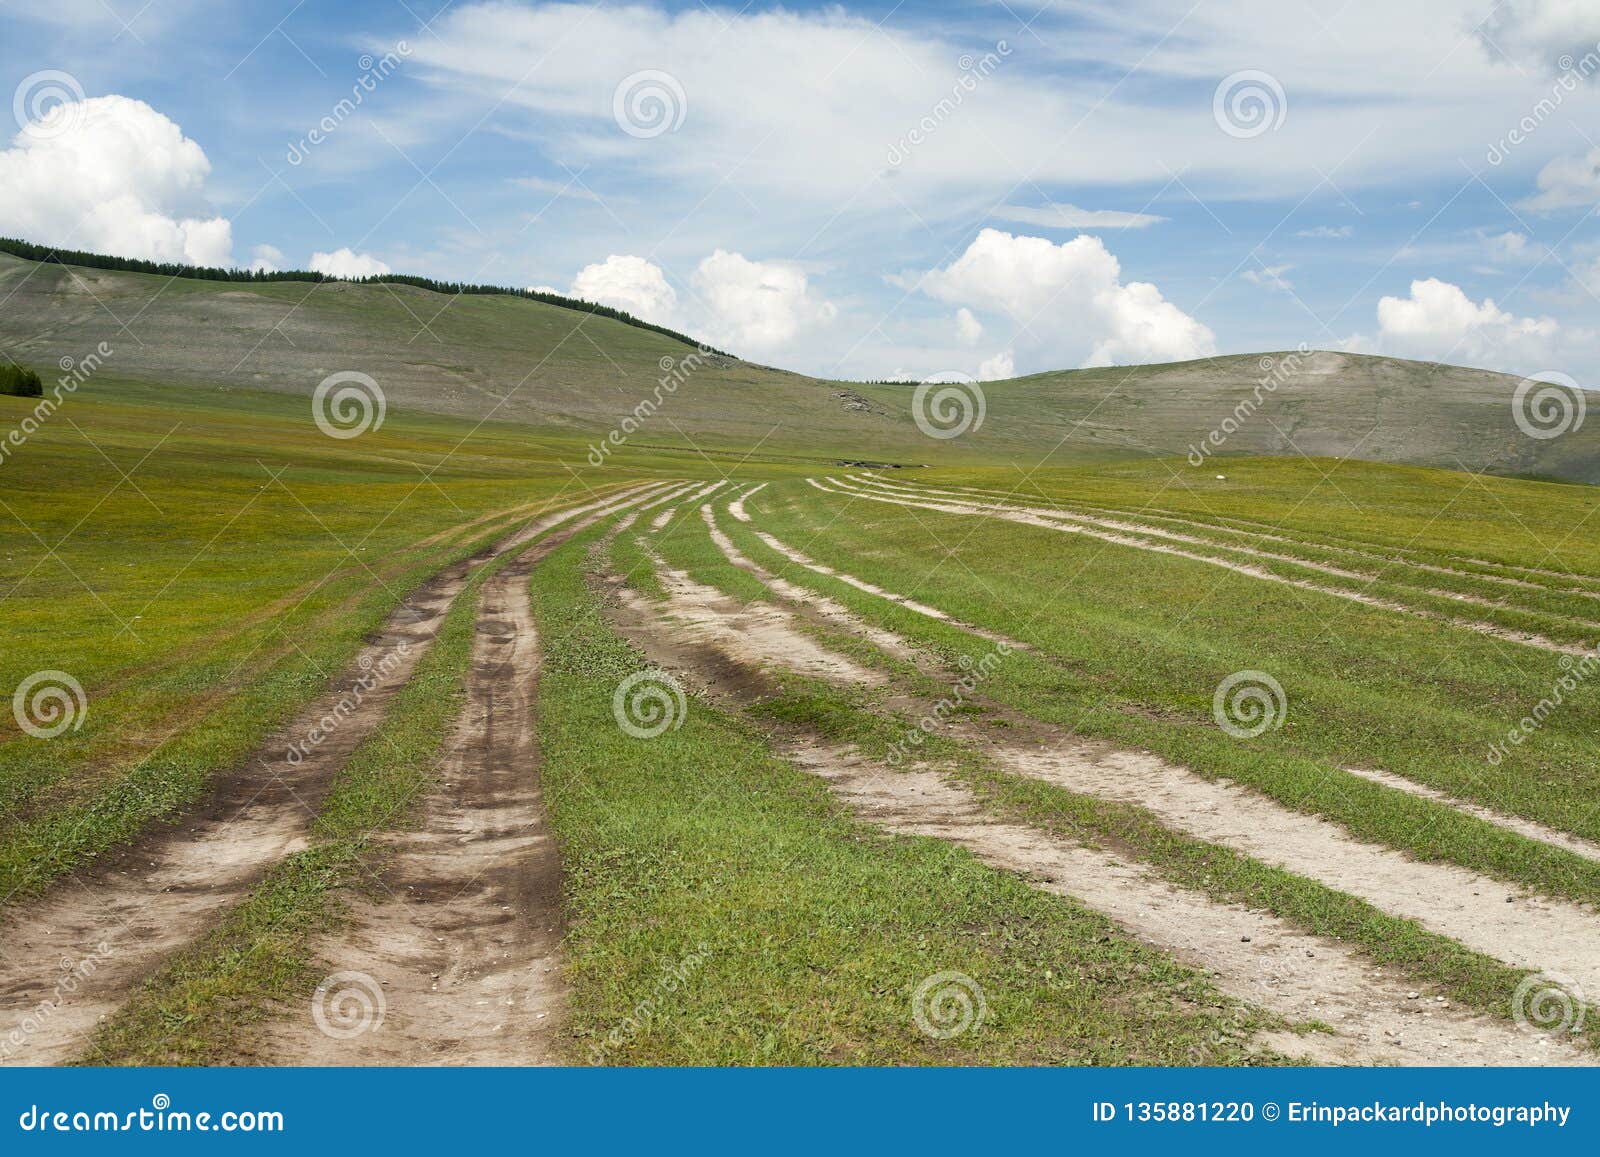 sprawling roads of northern mongolia